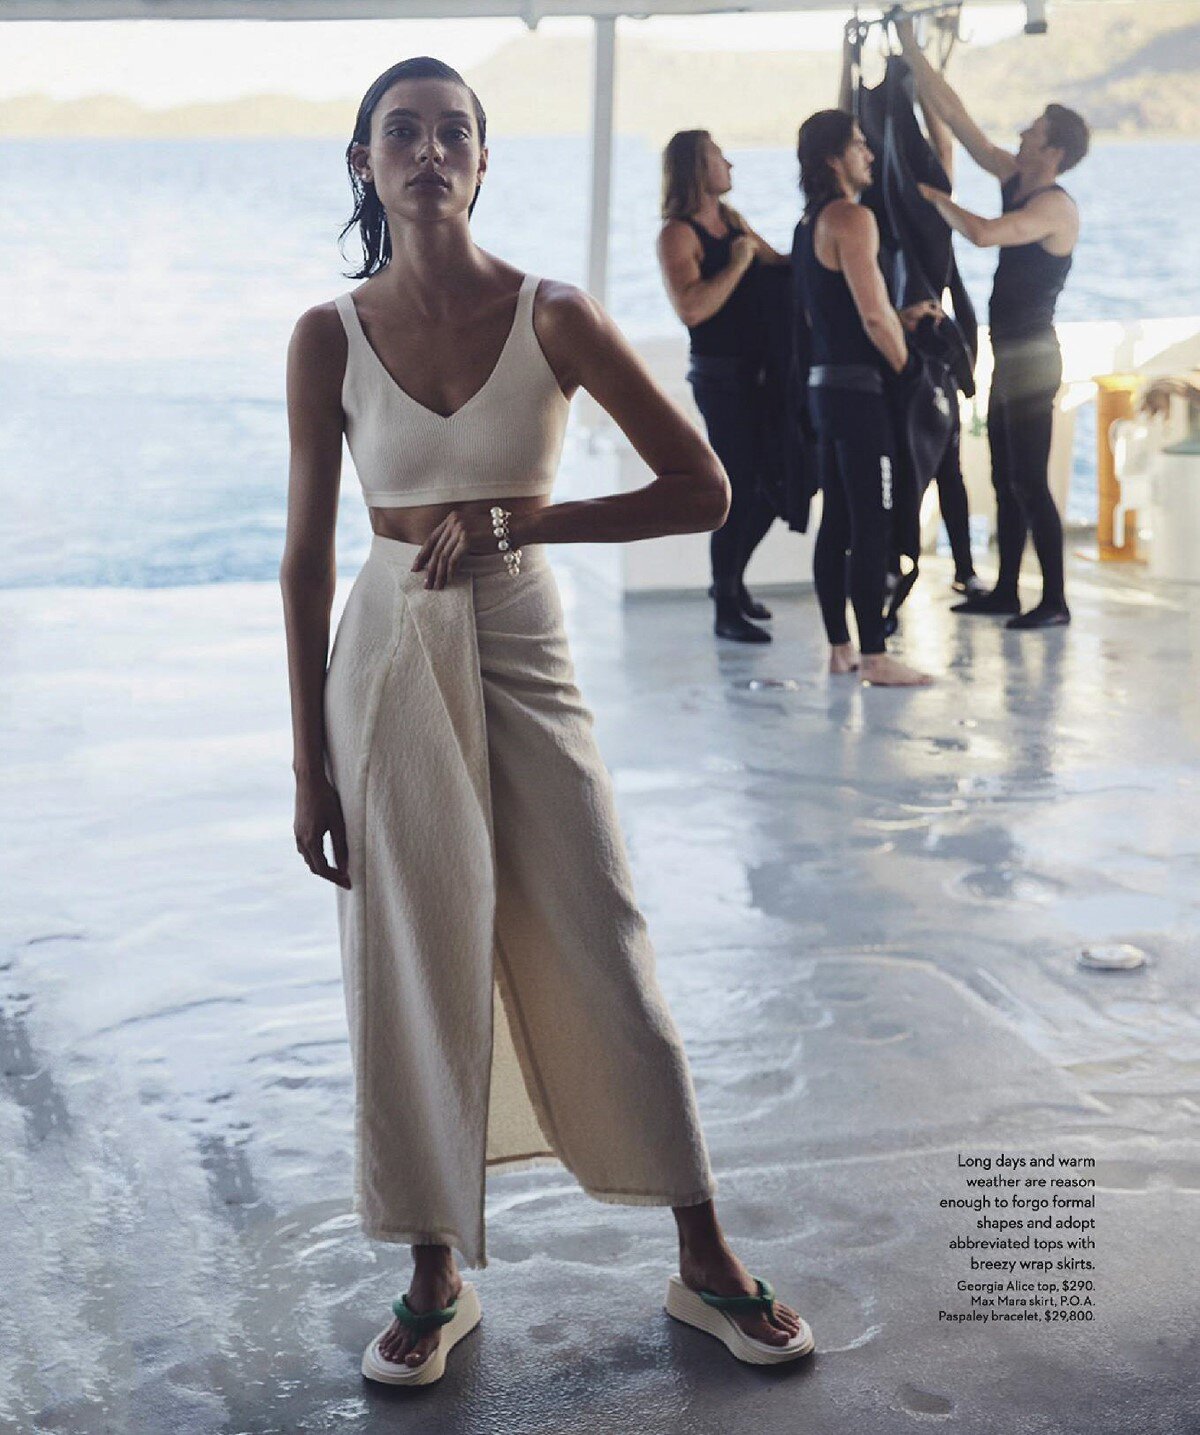 Charlee Fraser by Will Davidson for Vogue Australia Jan 2020 (11).jpg